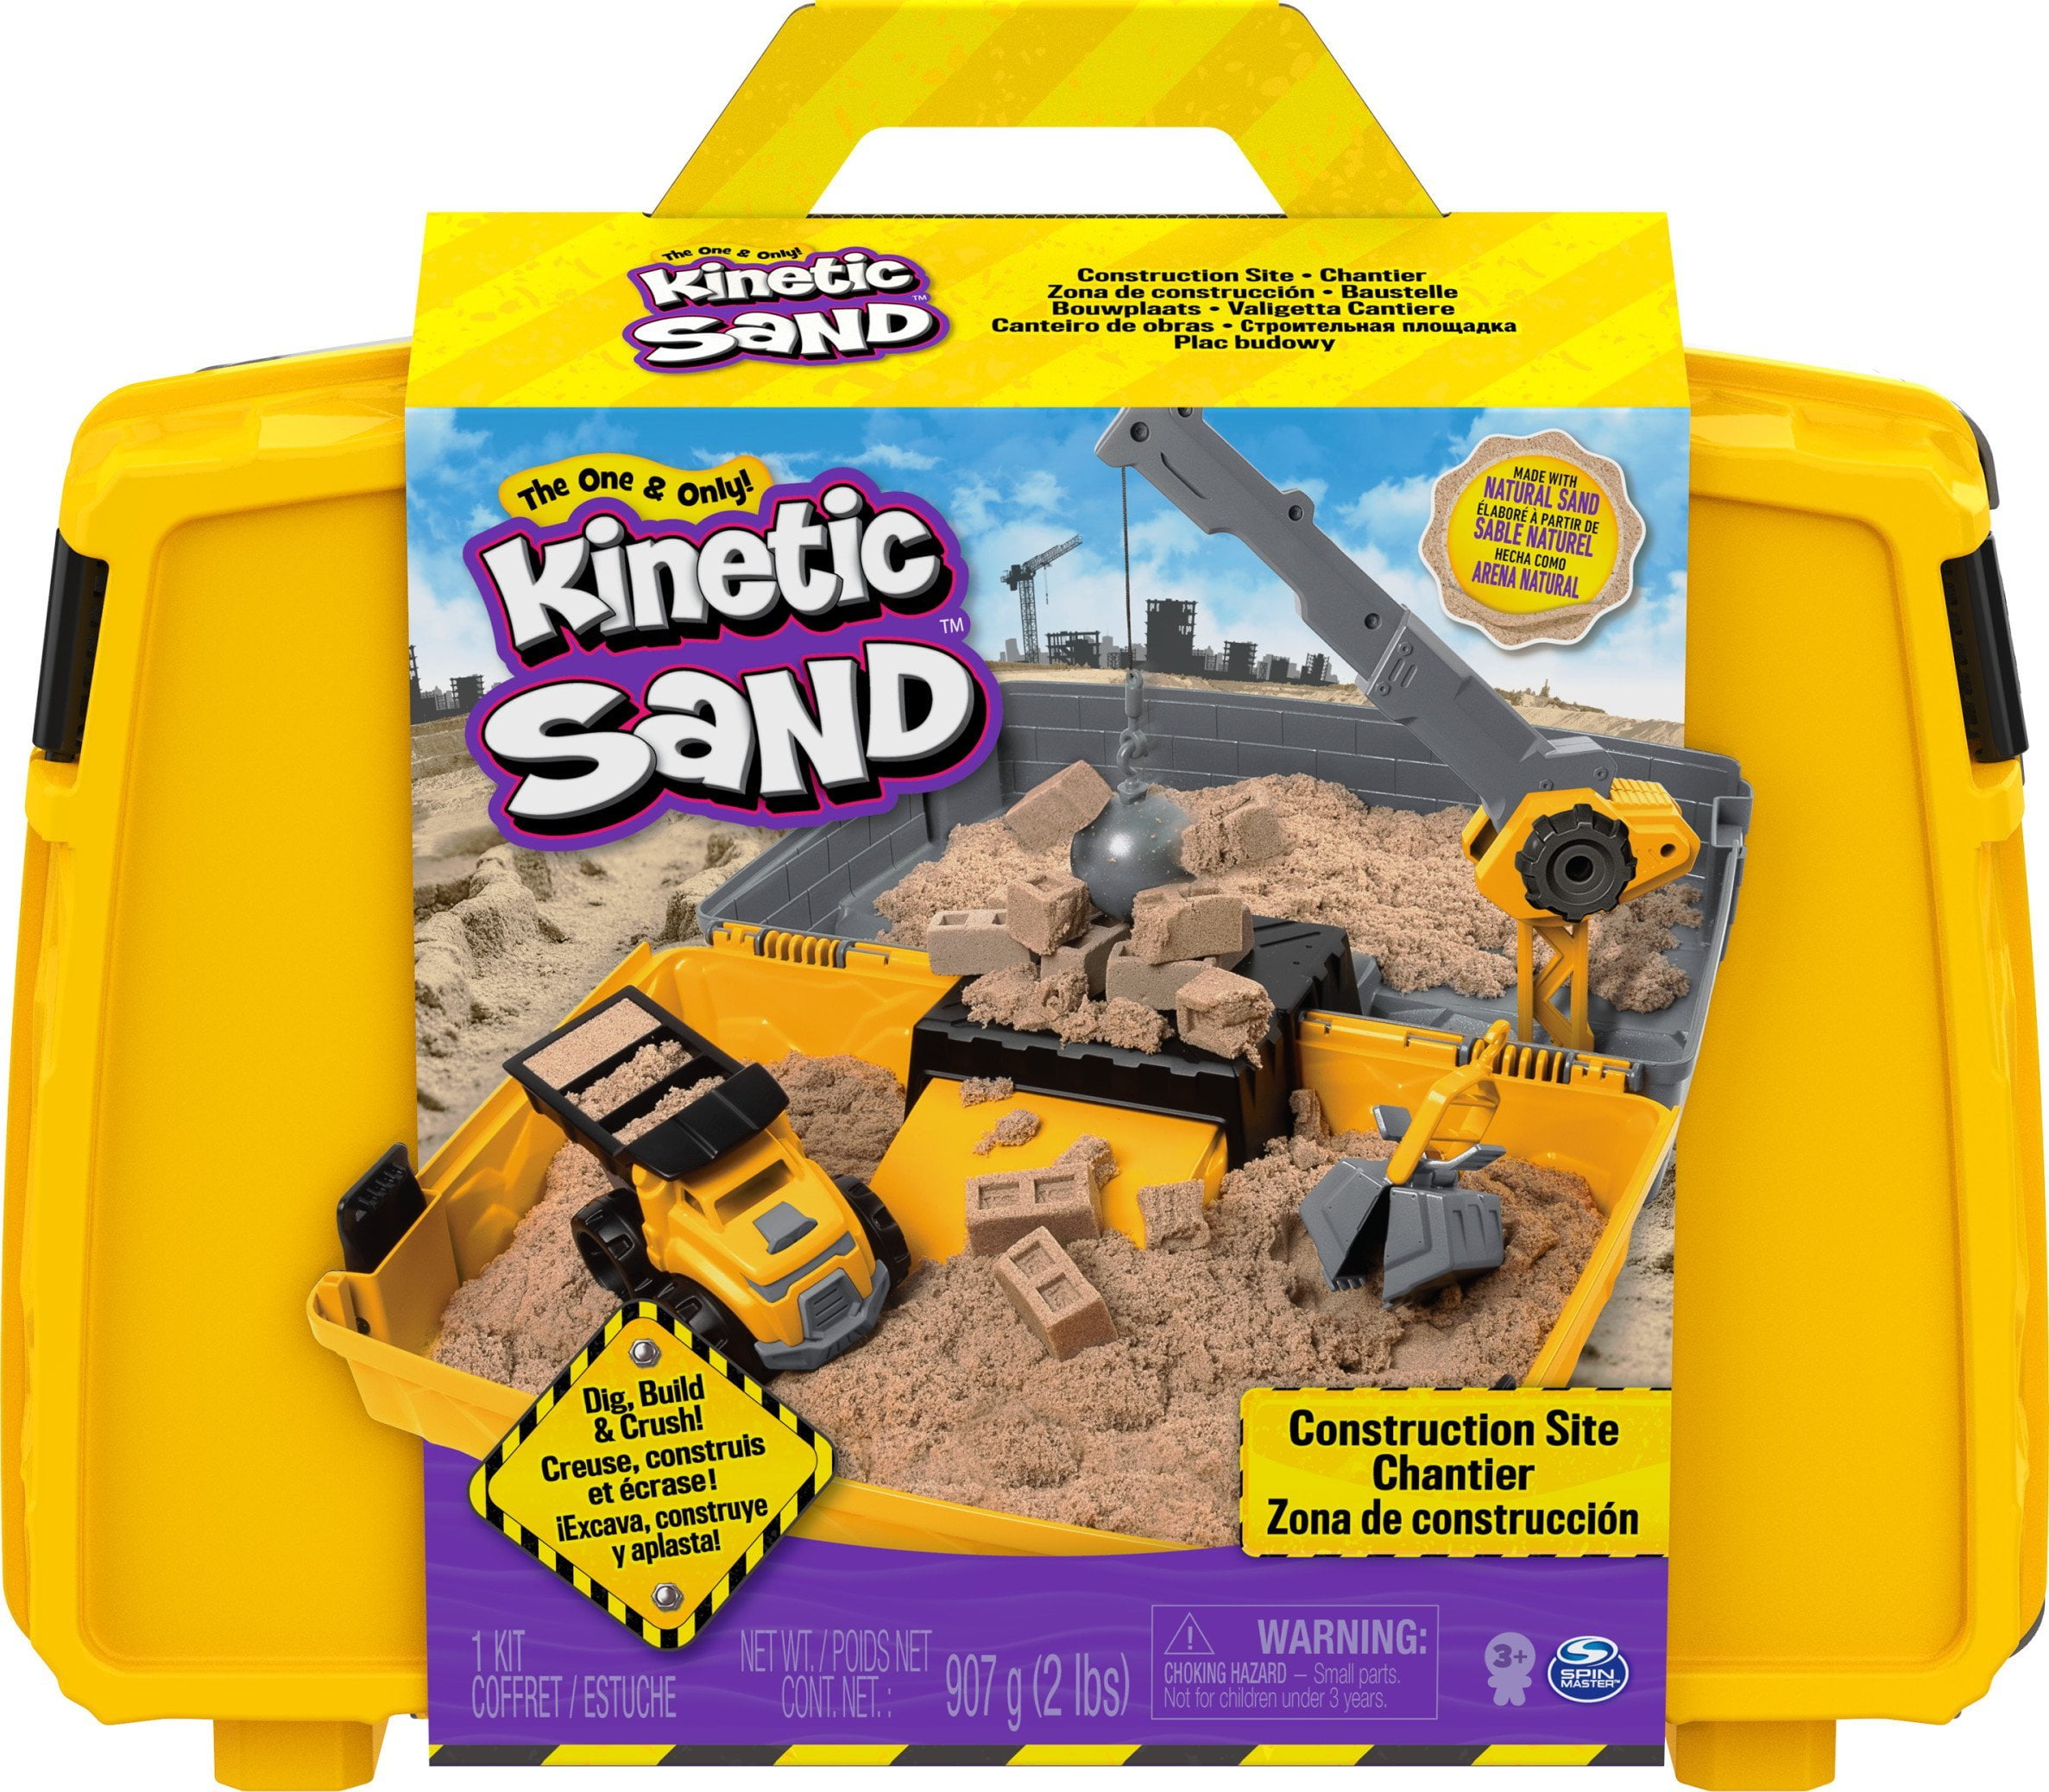 Kinetic Sand Sandyland Folding Sandbox